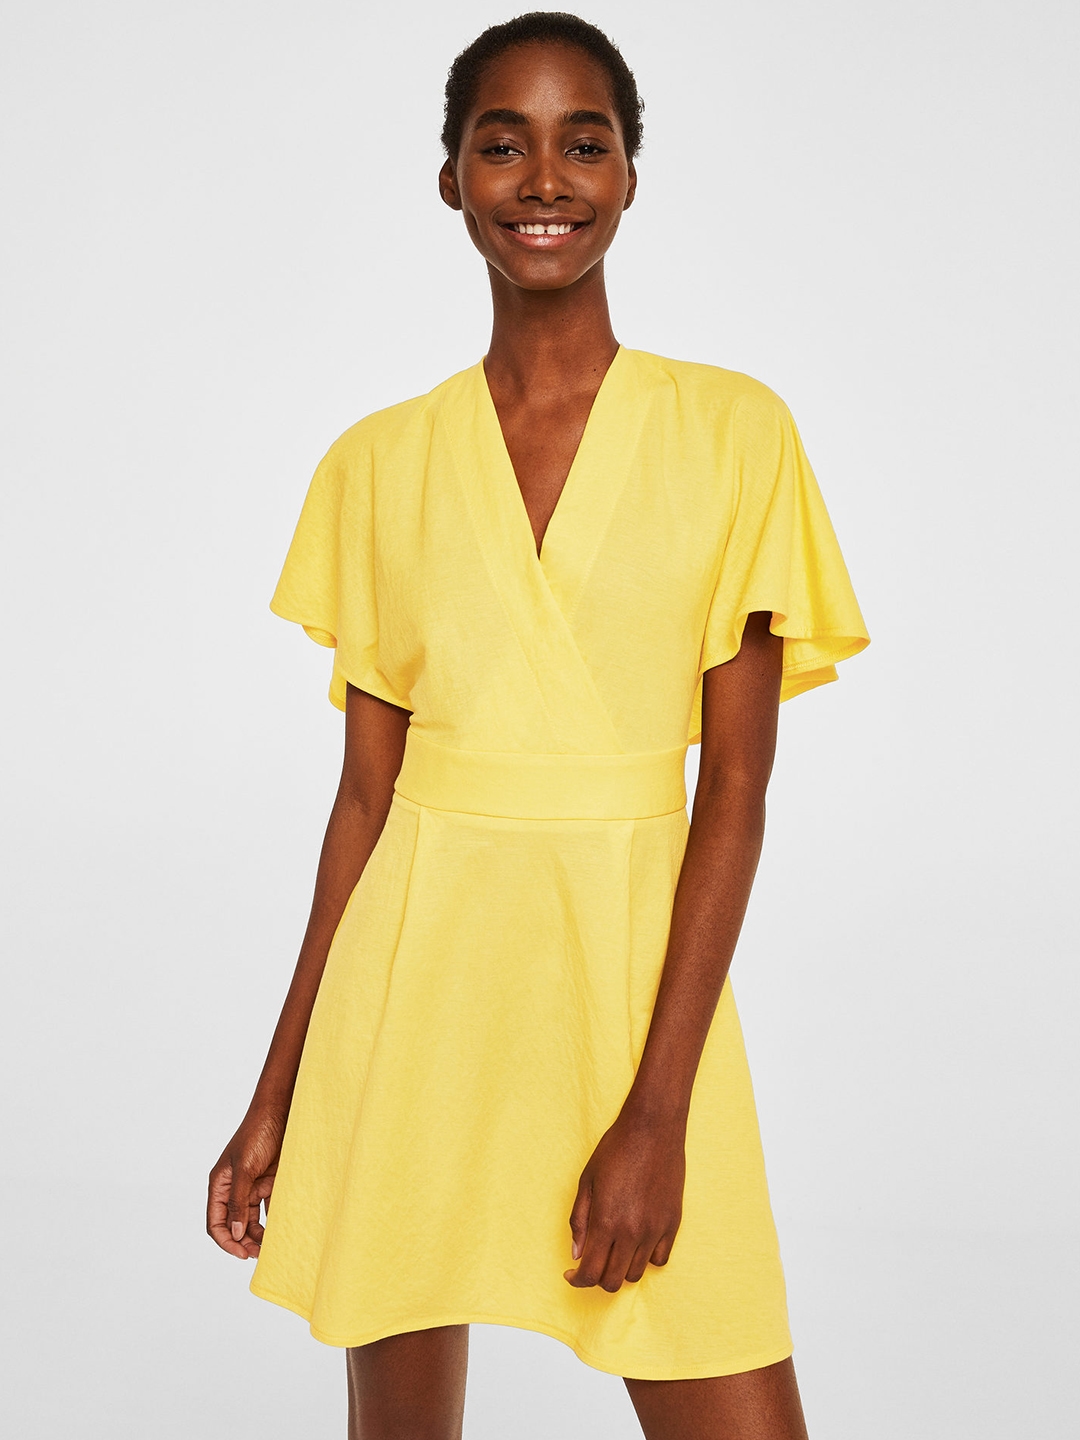 mango yellow wrap dress